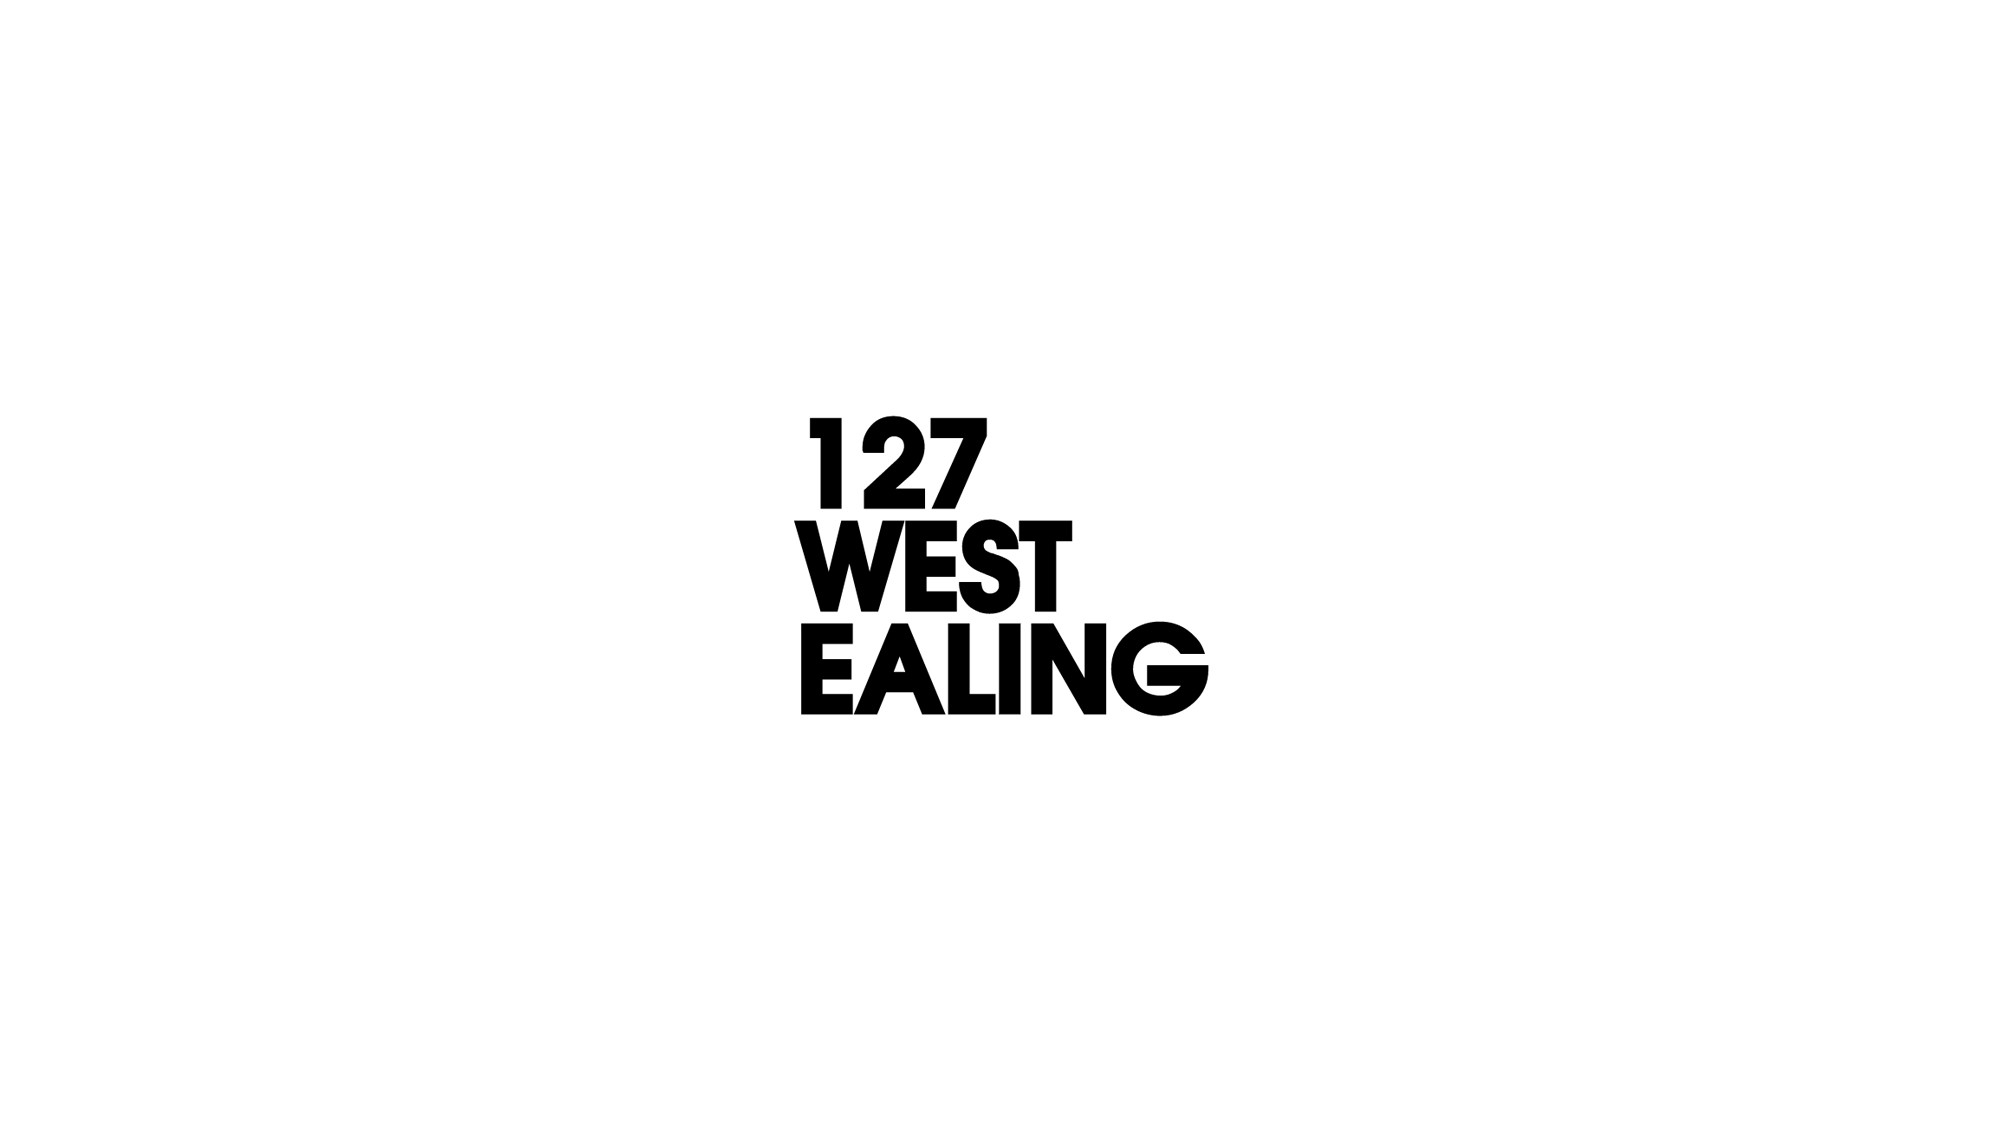 127 West Ealing development by Telereal Trillium.